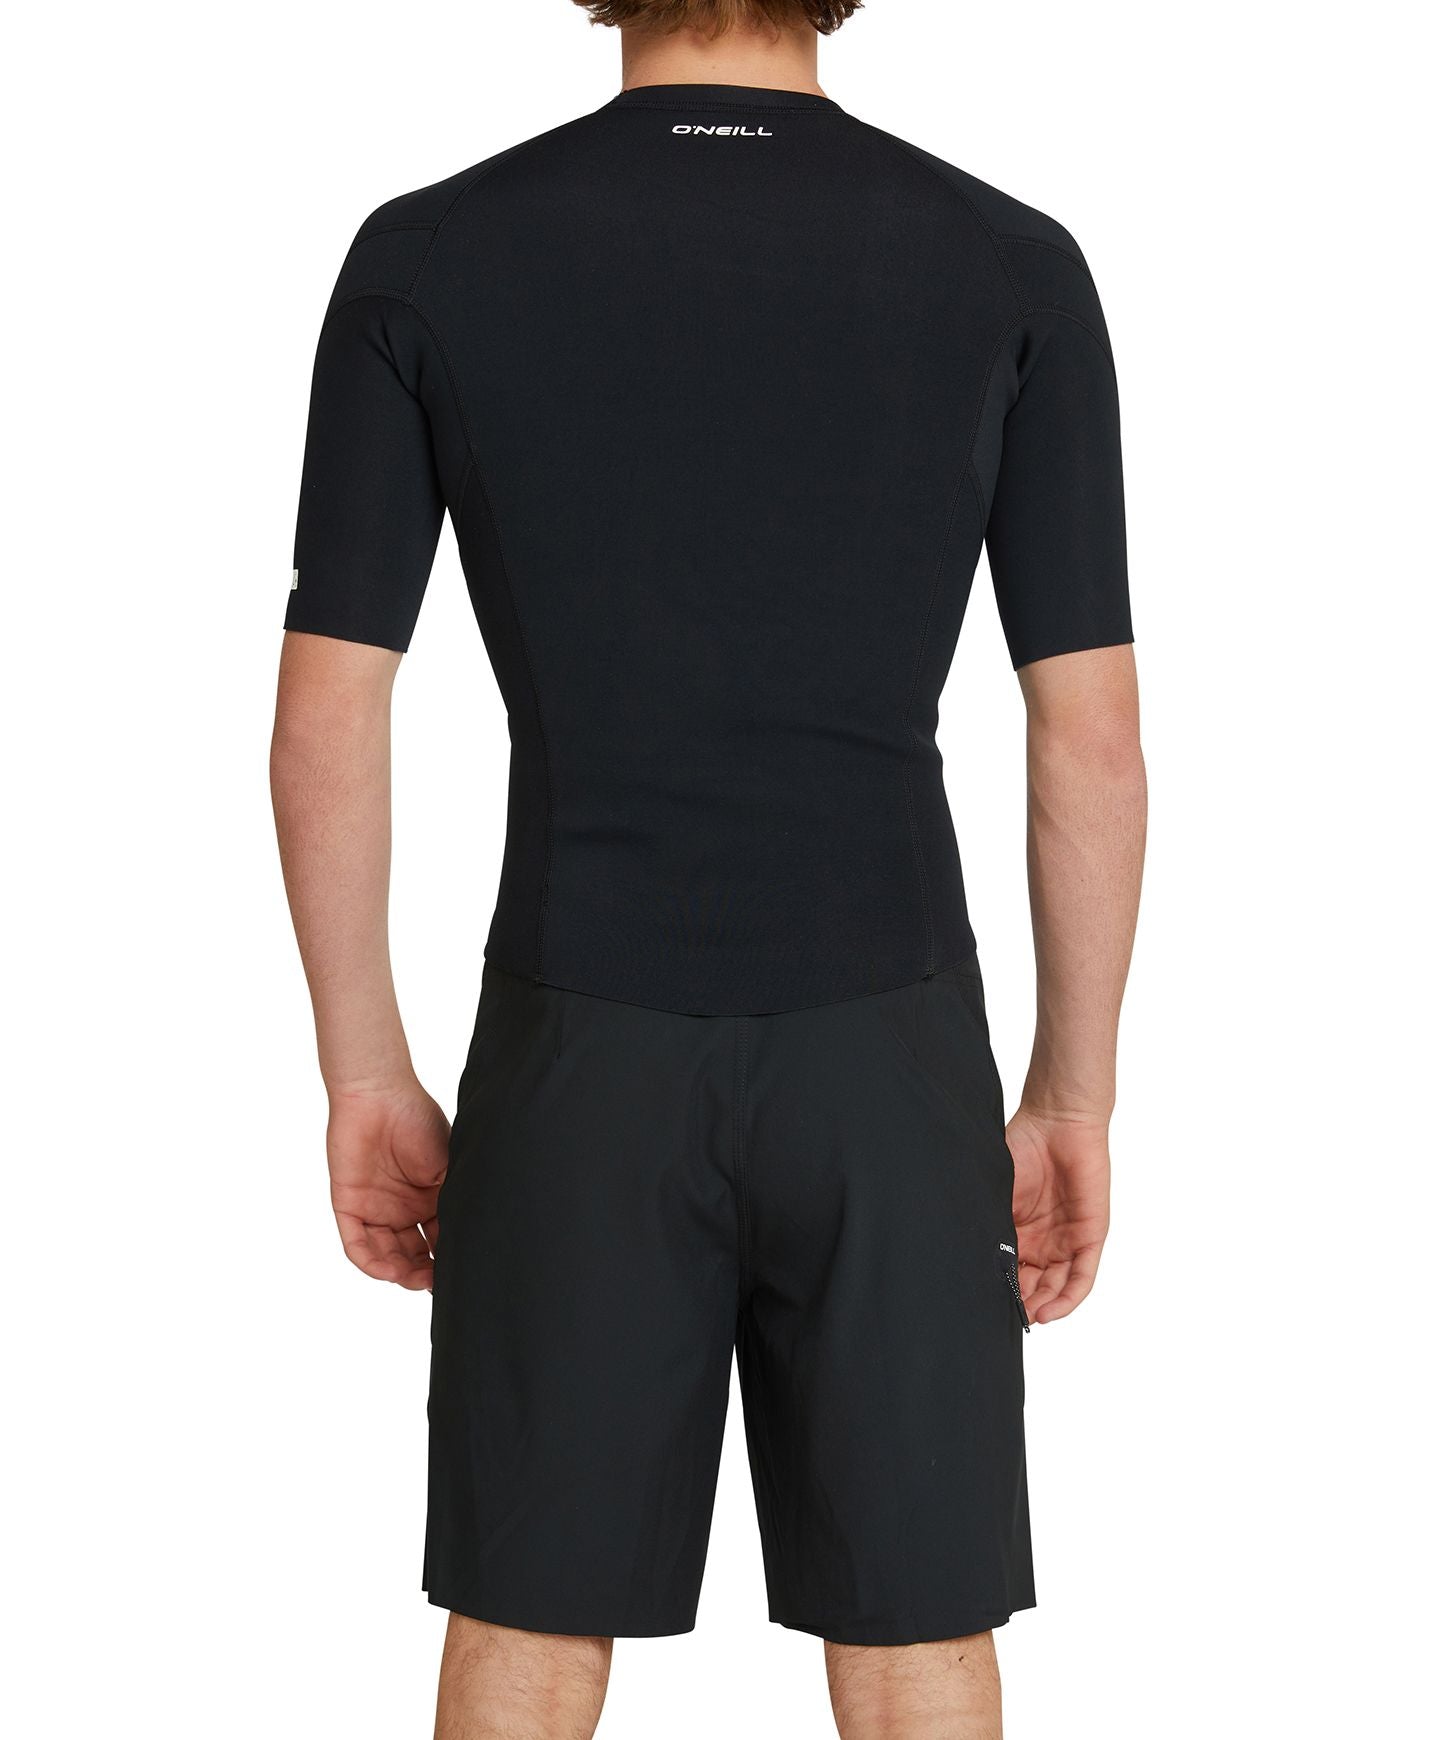 Reactor 1.5mm Short Sleeve Wetsuit Jacket - Black